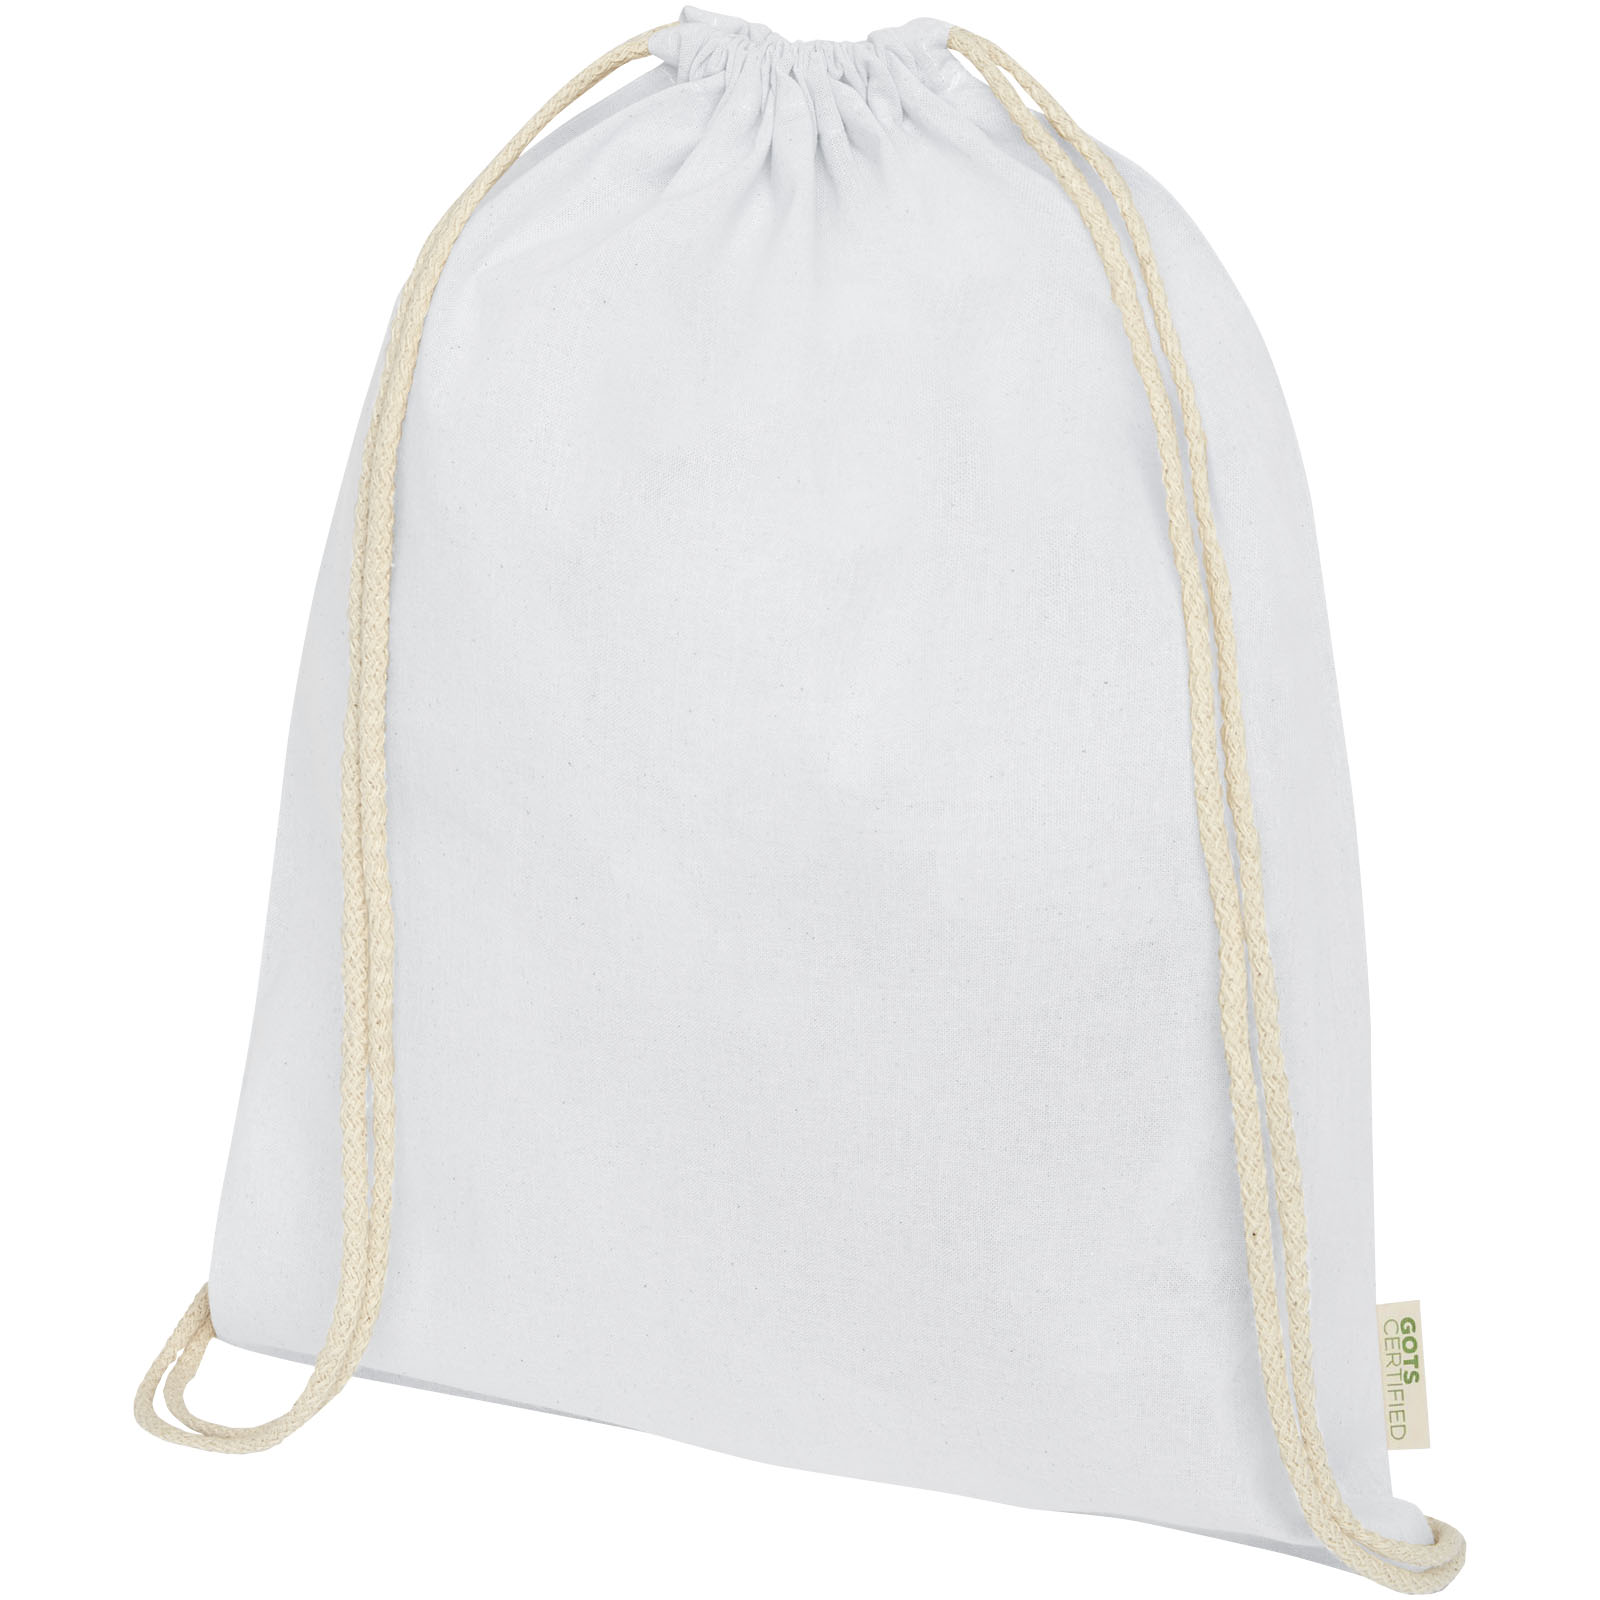 Drawstring Bags - Orissa 100 g/m² GOTS organic cotton drawstring bag 5L